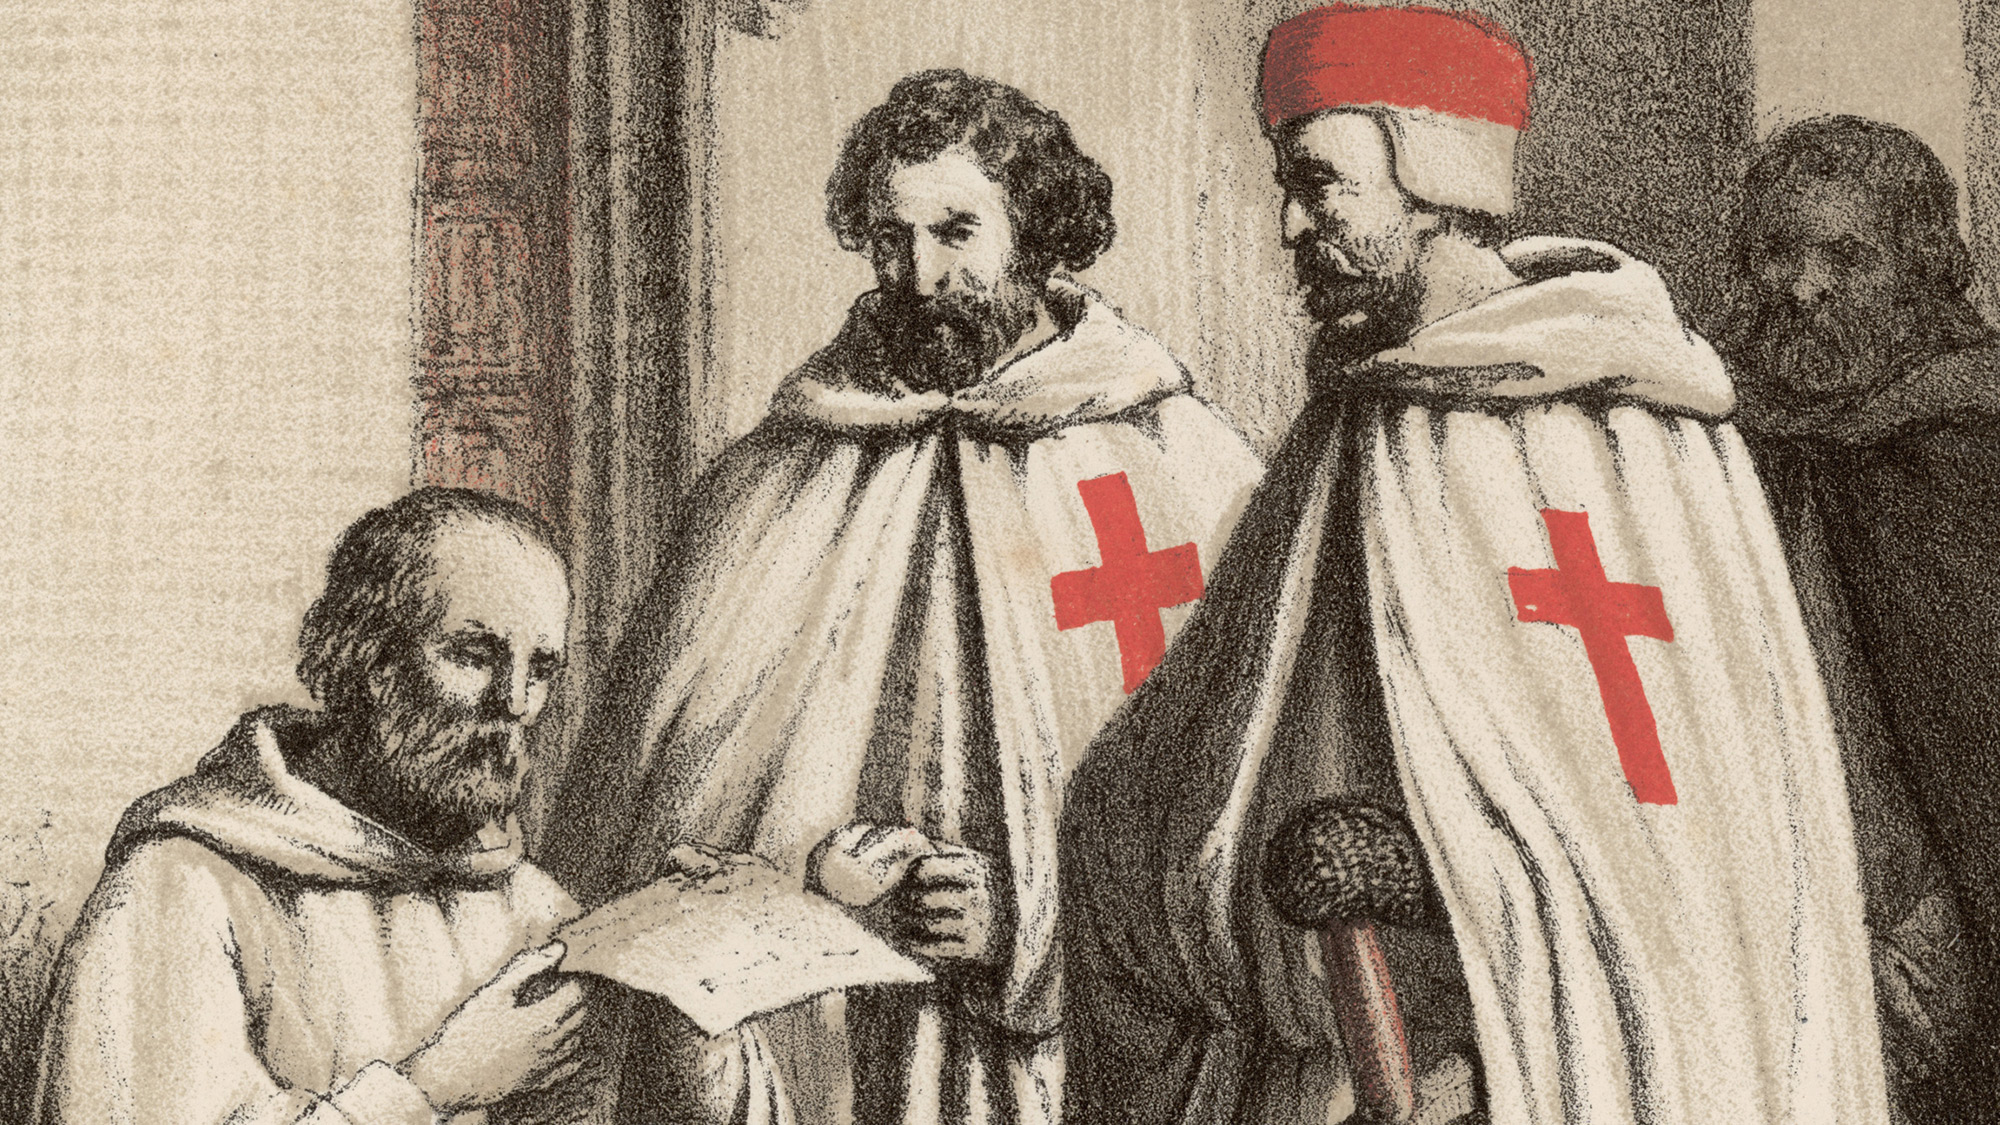 Read More: Templars 101